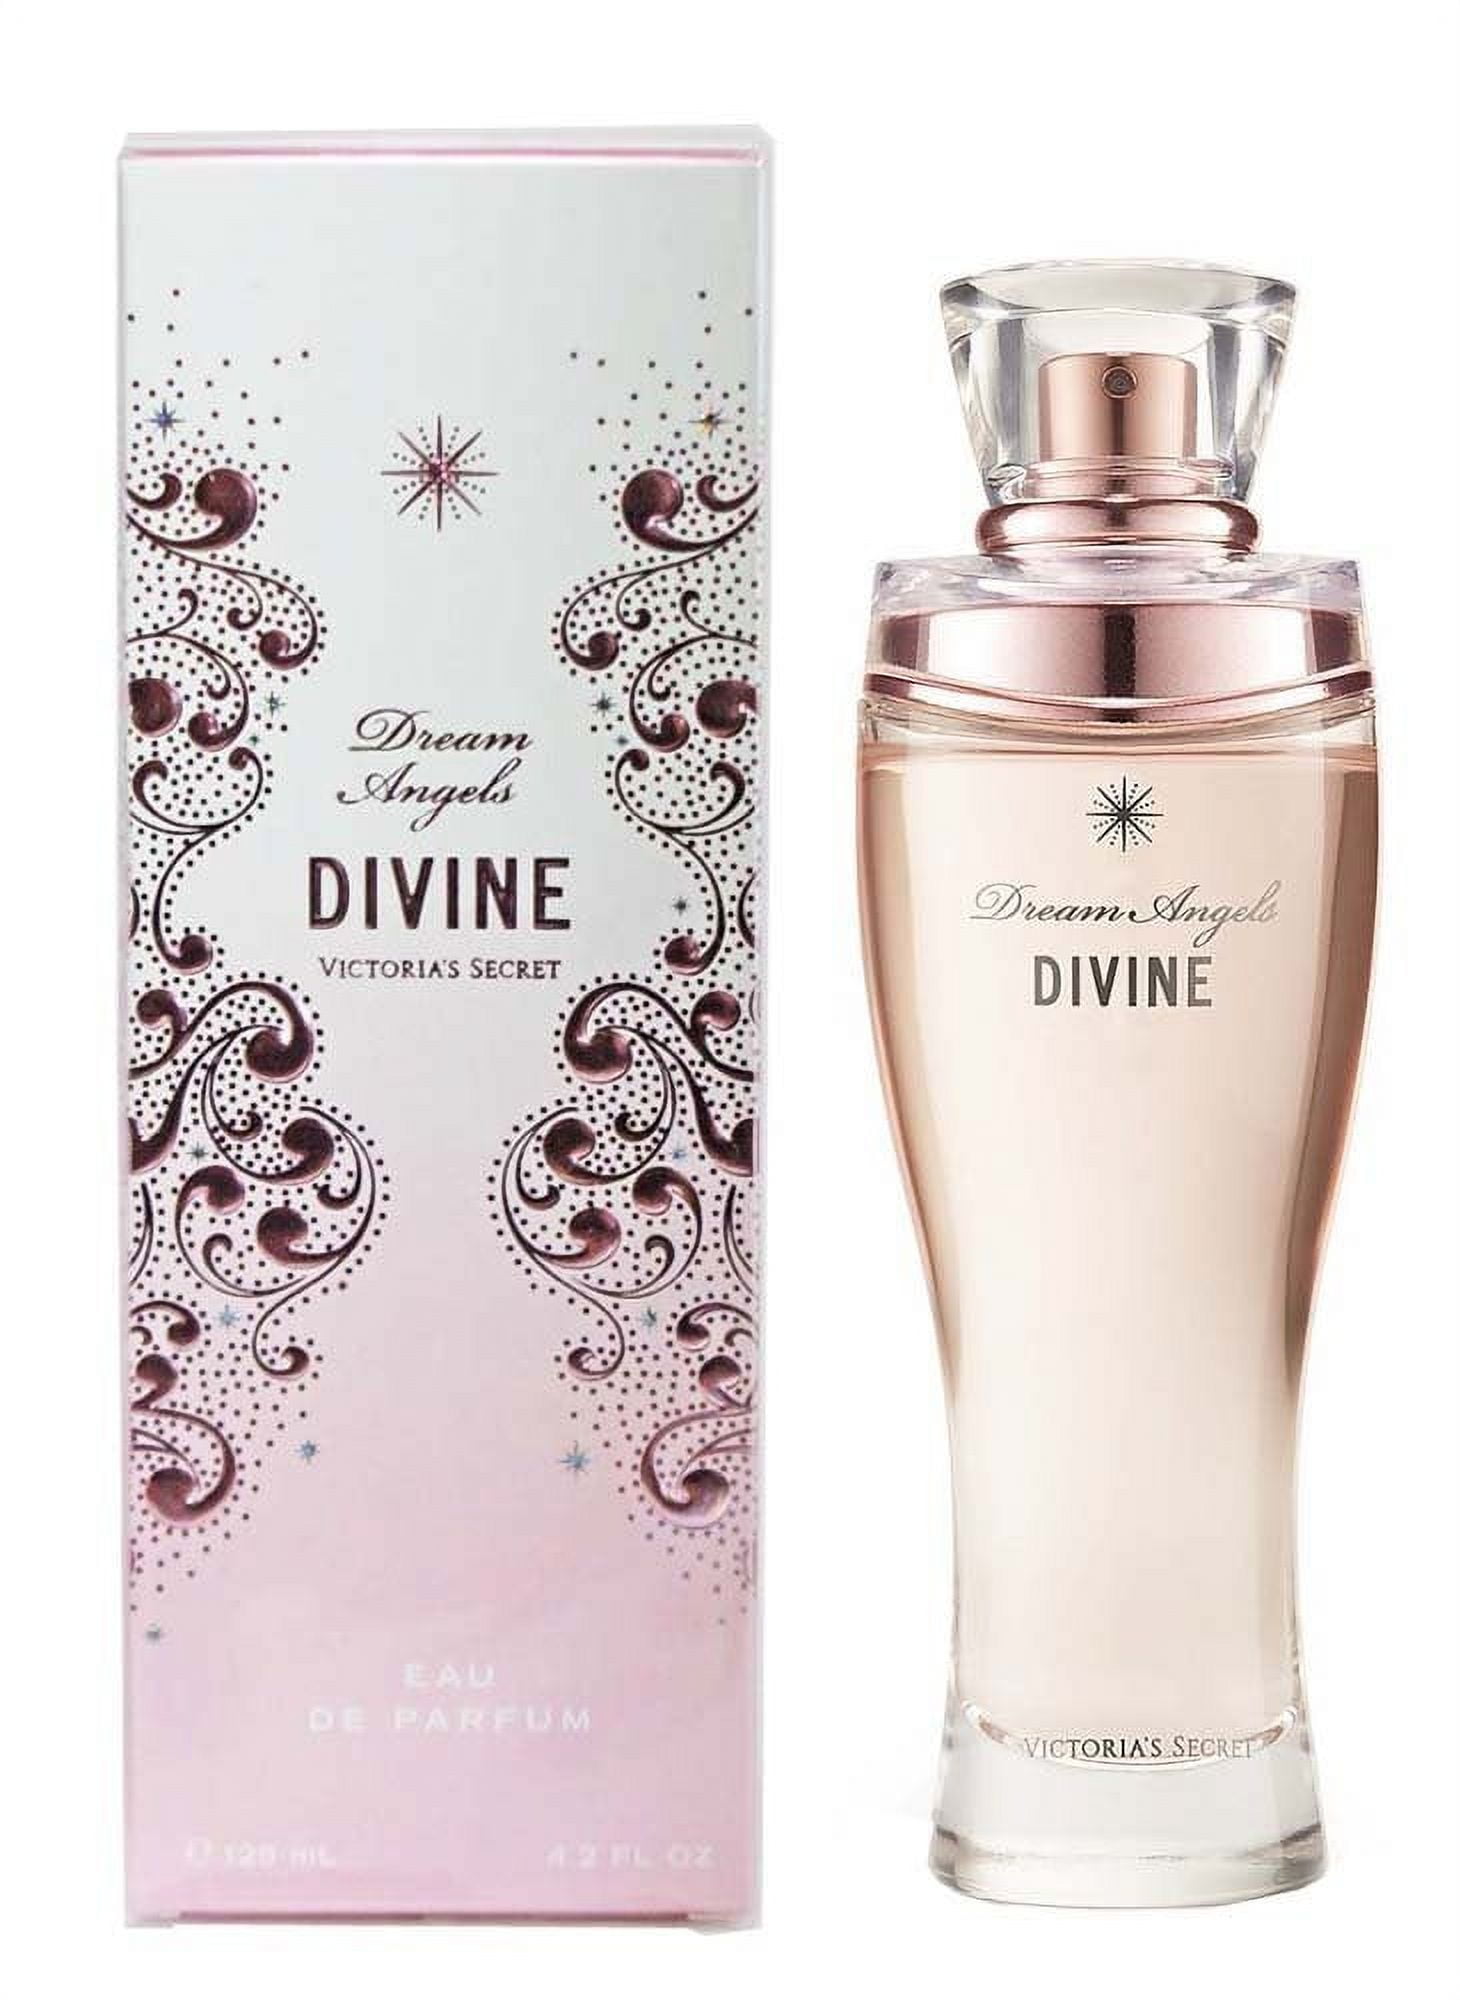 Victoria's Secret Dream Angels divine Perfume trio - Fragrance